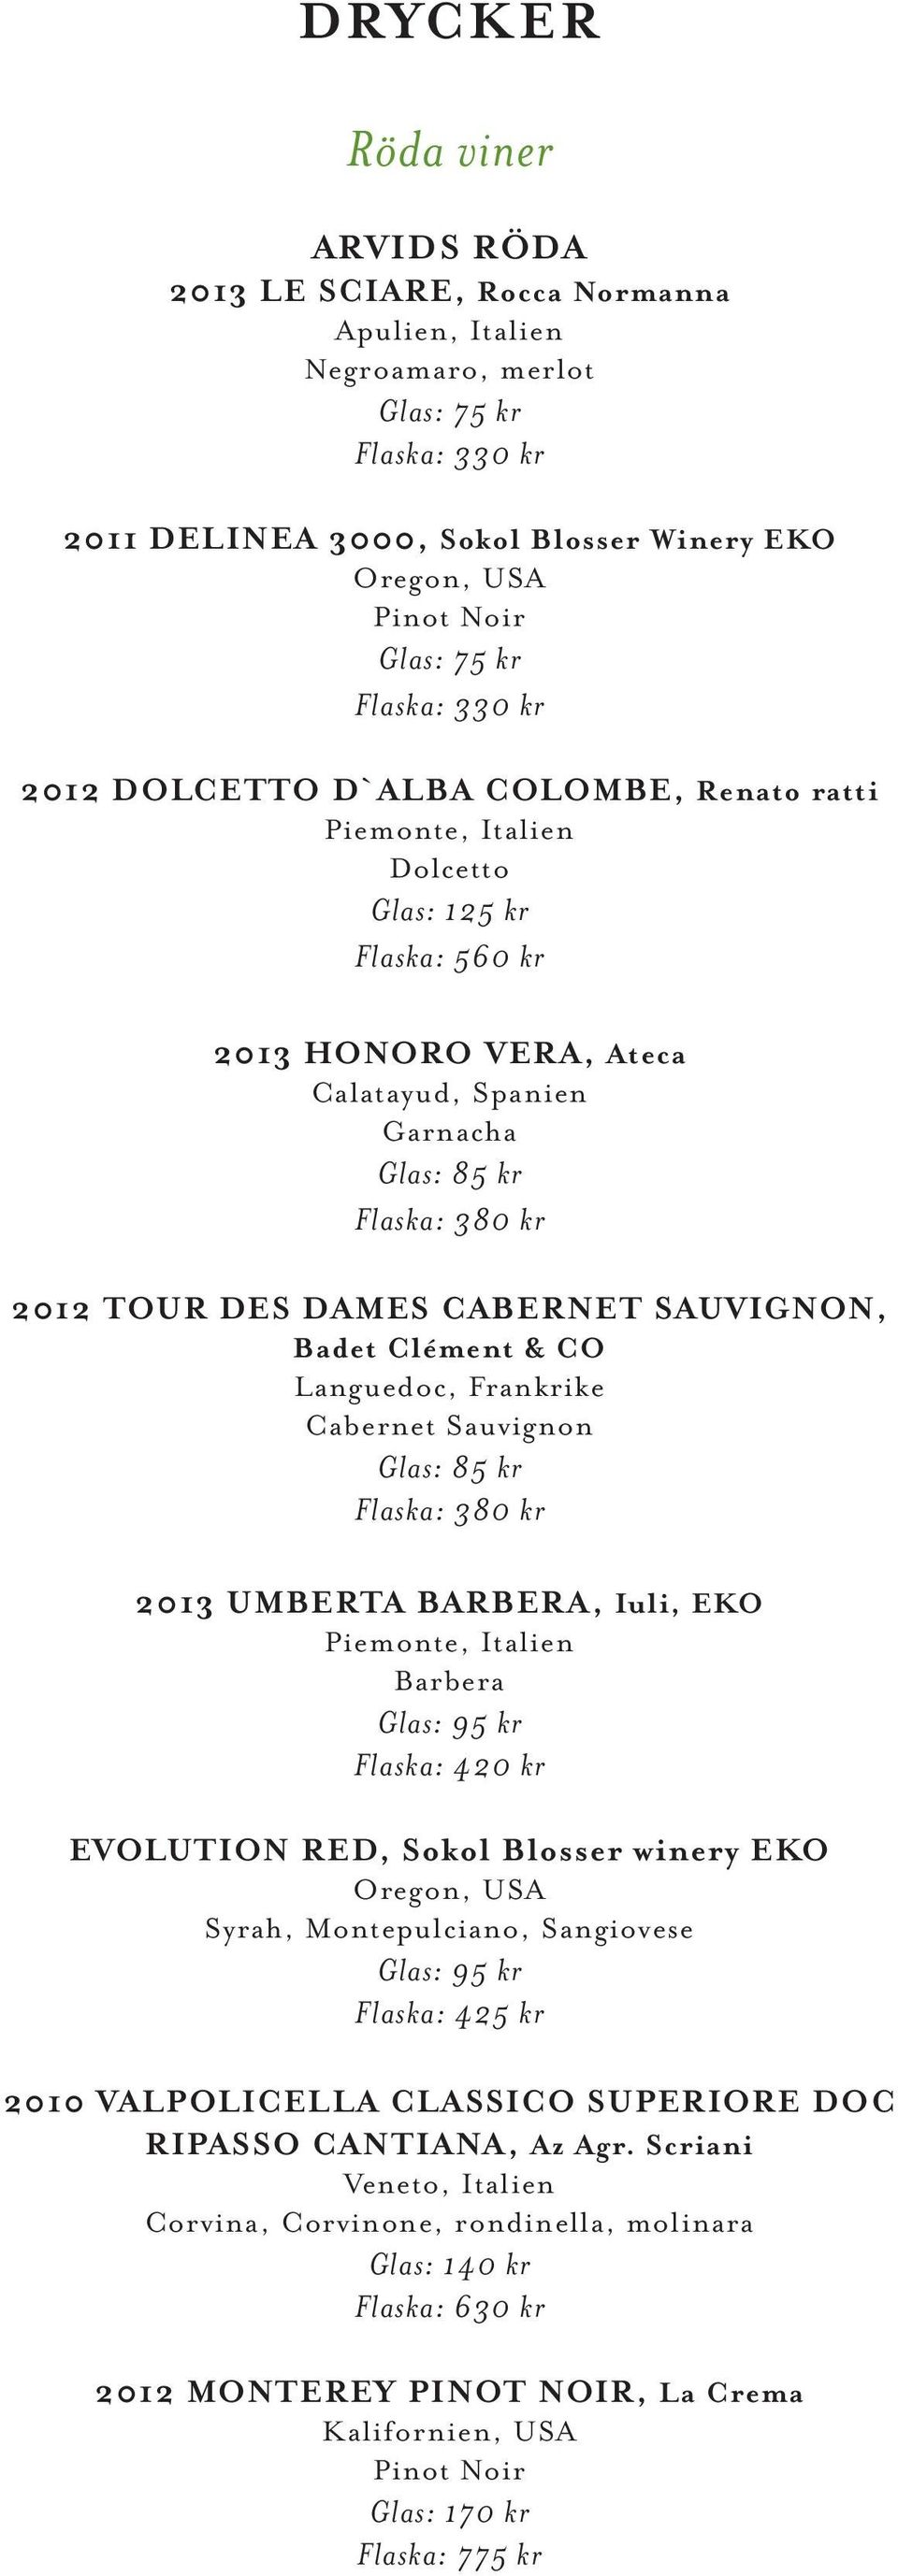 TOUR DES DAMES CABERNET SAUVIGNON, Badet Clément & CO Languedoc, Frankrike Cabernet Sauvignon Glas: 85 kr Flaska: 380 kr 2013 UMBERTA BARBERA, Iuli, EKO Piemonte, Italien Barbera Flaska: 420 kr